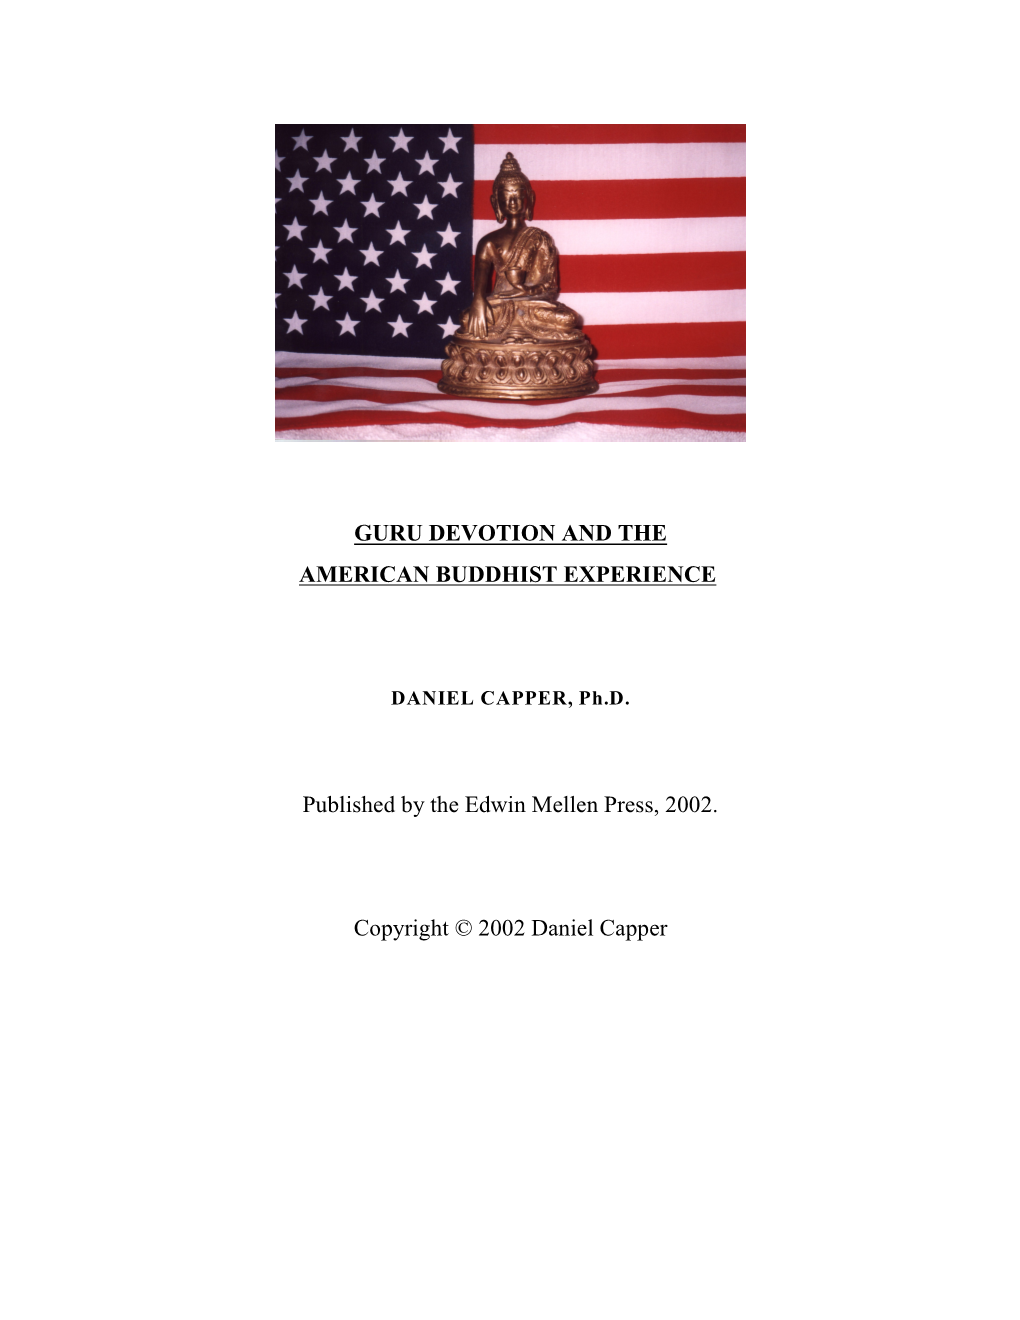 Guru Devotion and the American Buddhist Experience